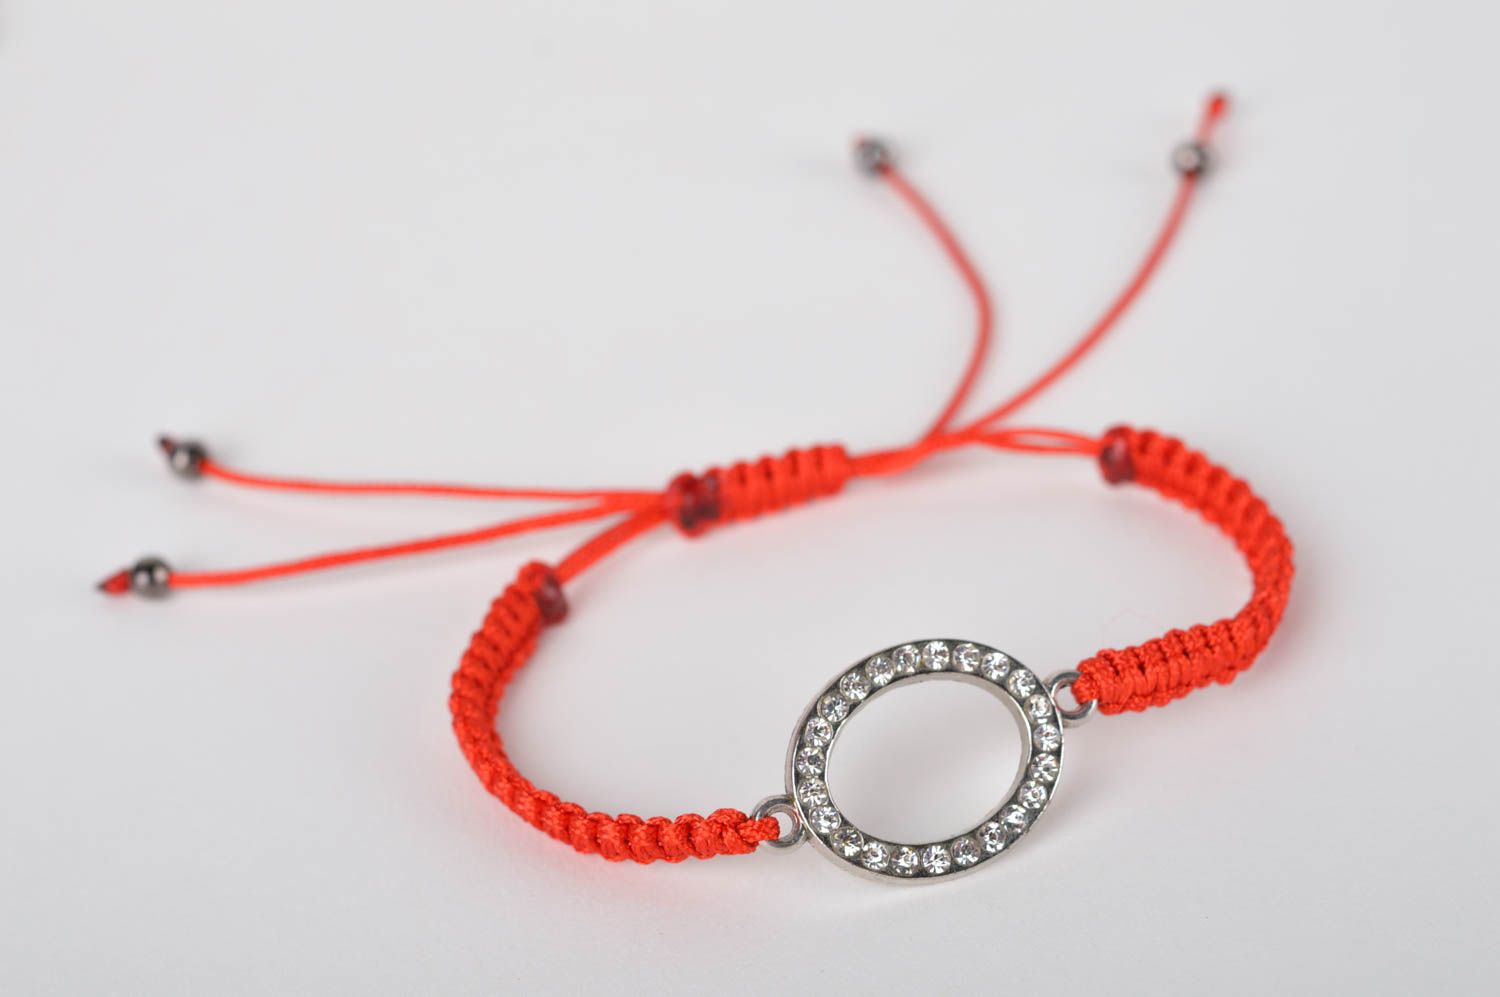 Unusual handmade thread bracelet friendship bracelet designs gifts for her photo 2